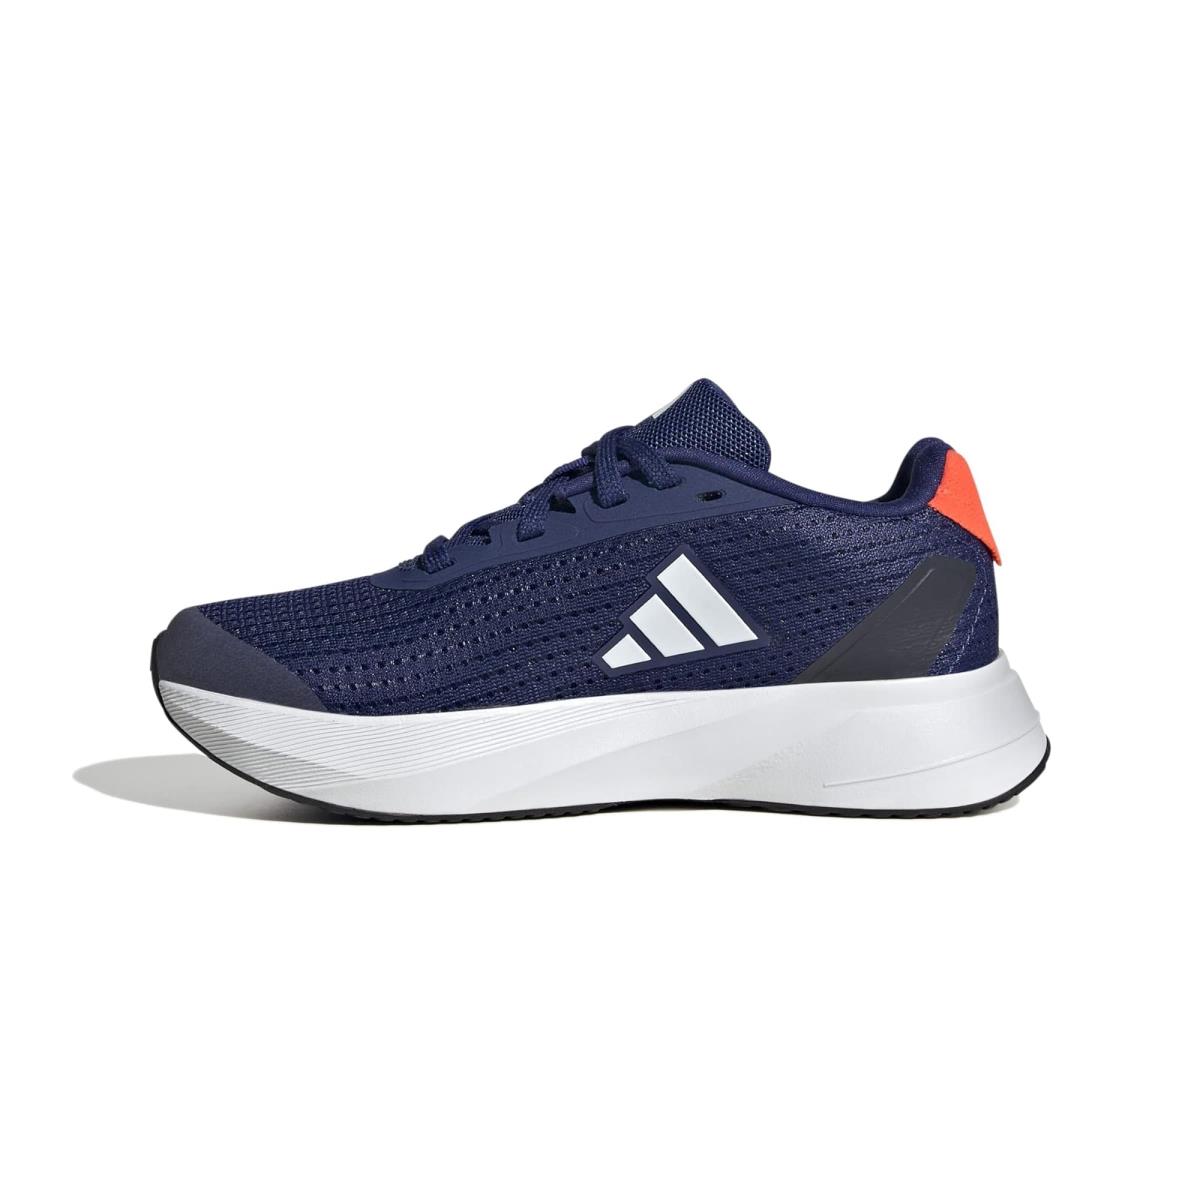 Adidas Unisex-child Duramo Sl Sneakers Little Big Victory Blue/White/Solar Red